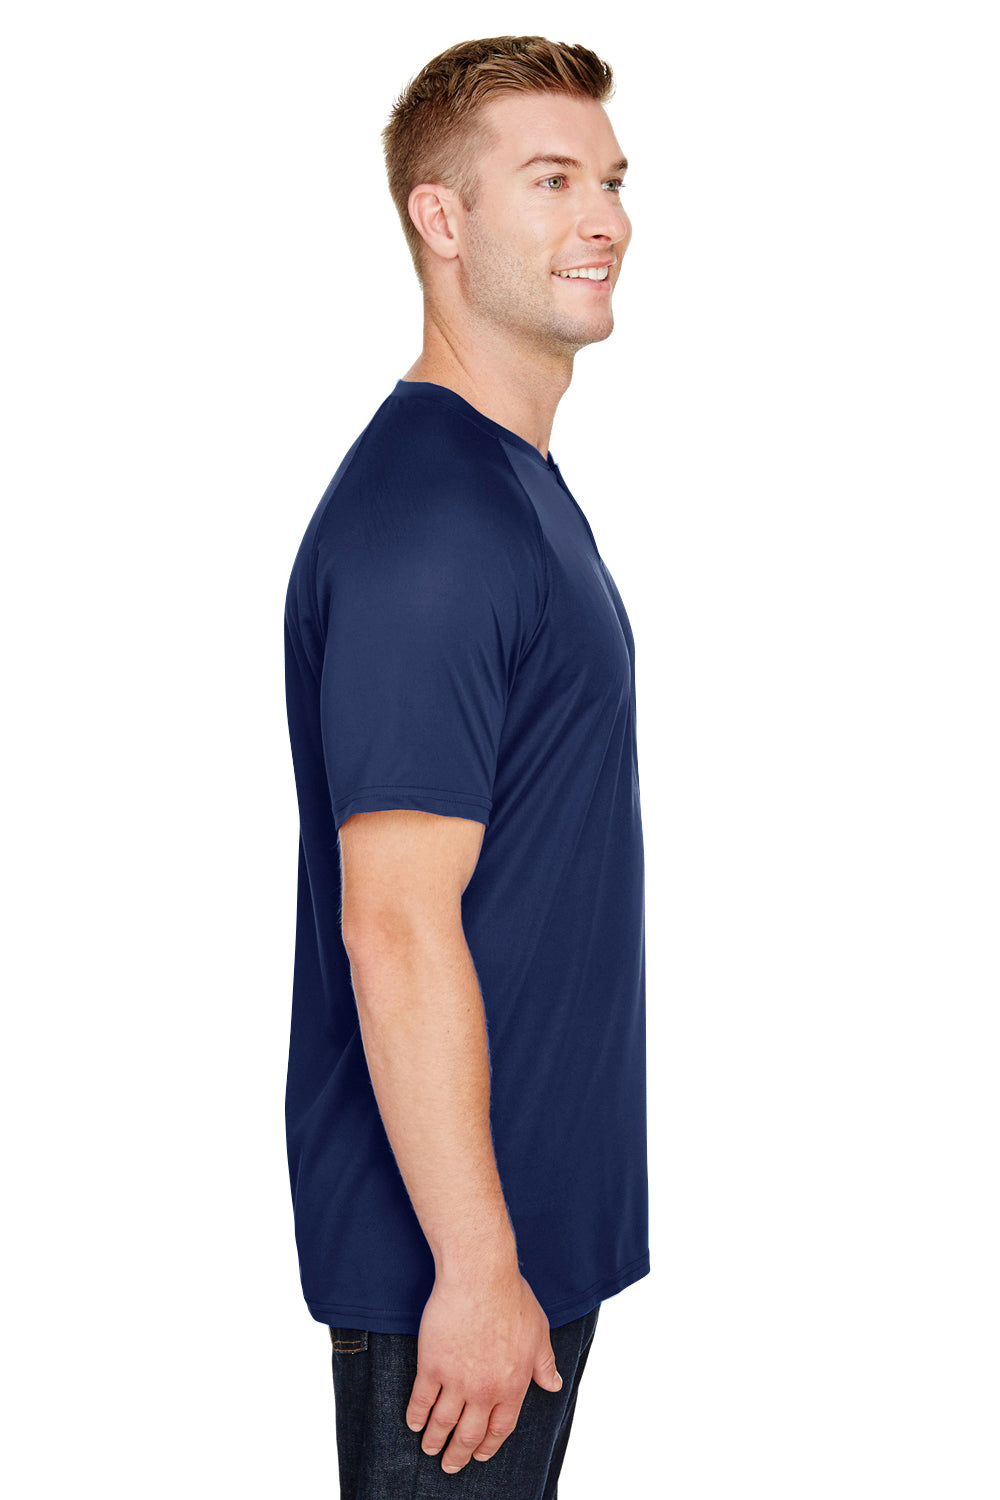 Augusta Sportswear AG1565 Mens Attain 2 Moisture Wicking Button Short Sleeve Baseball Jersey Navy Blue Model Side